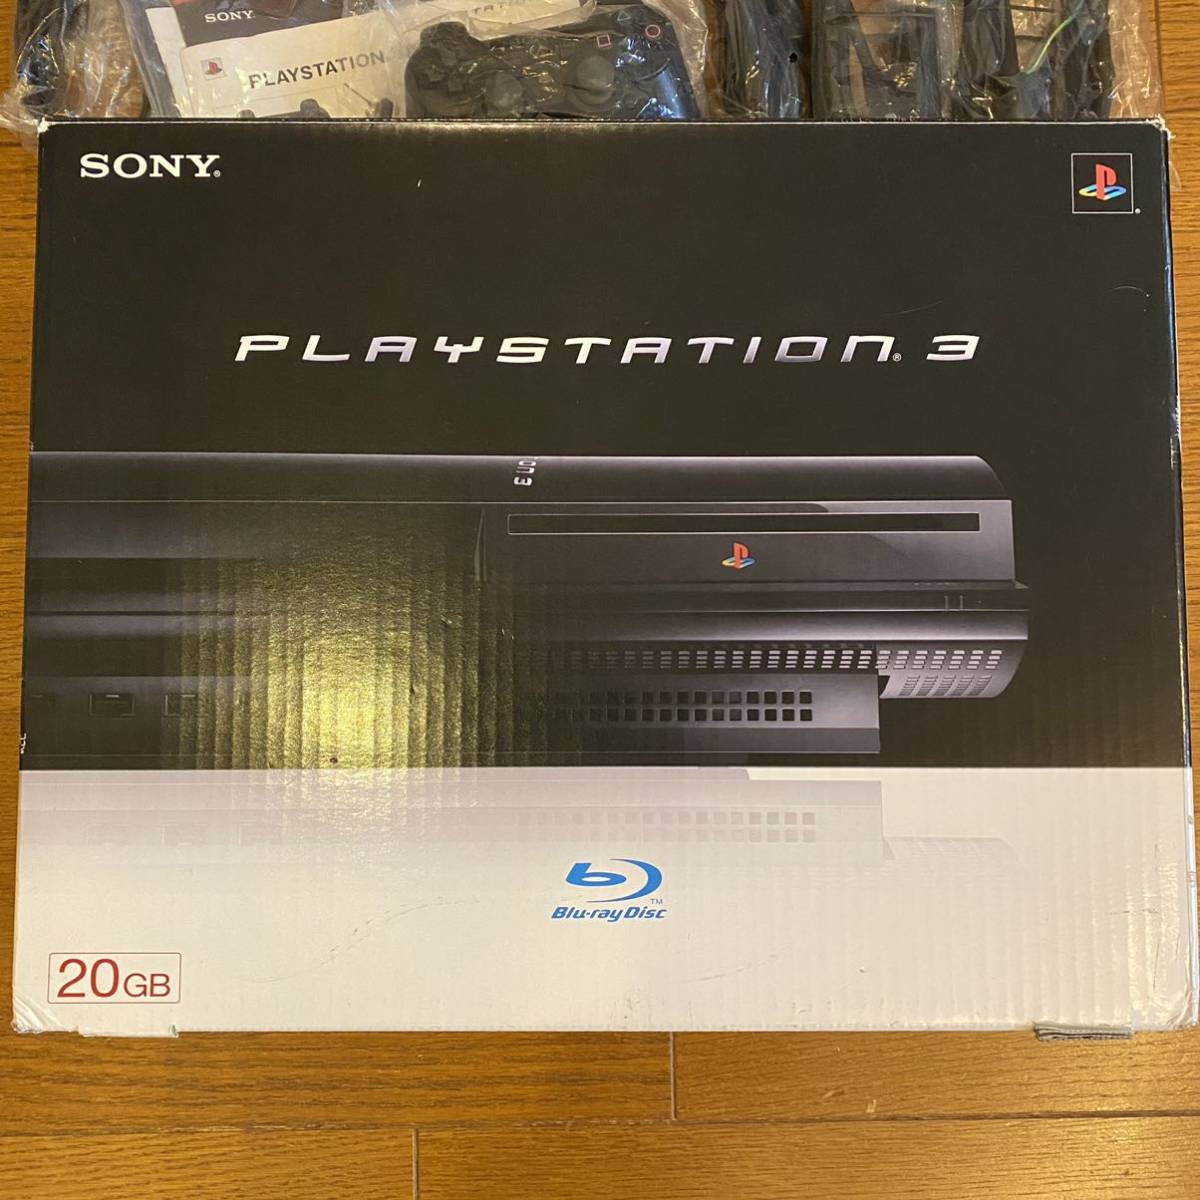 PS3 PlayStation3 本体 初期型 20GB CECHB00 - ゲームソフト/ゲーム機本体